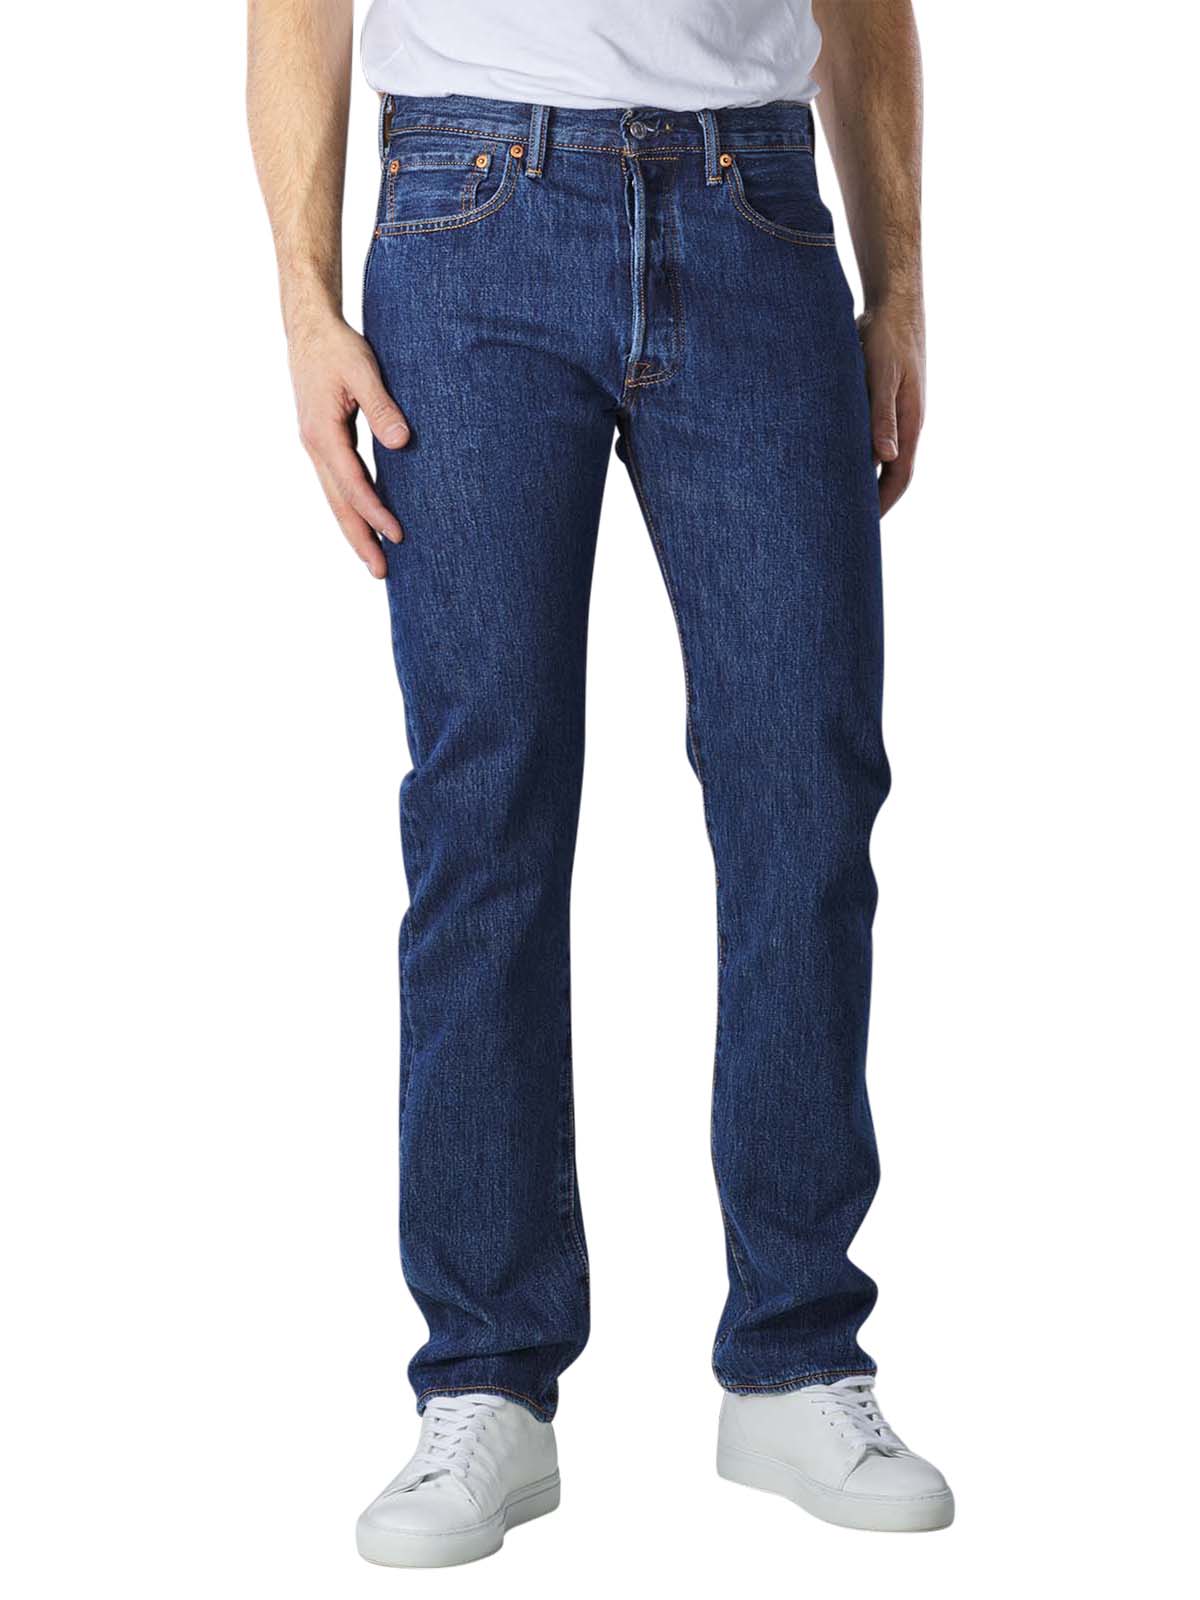 Levi's 501 Jeans dark stonewash Levi's Men's Jeans | Free Shipping on ...